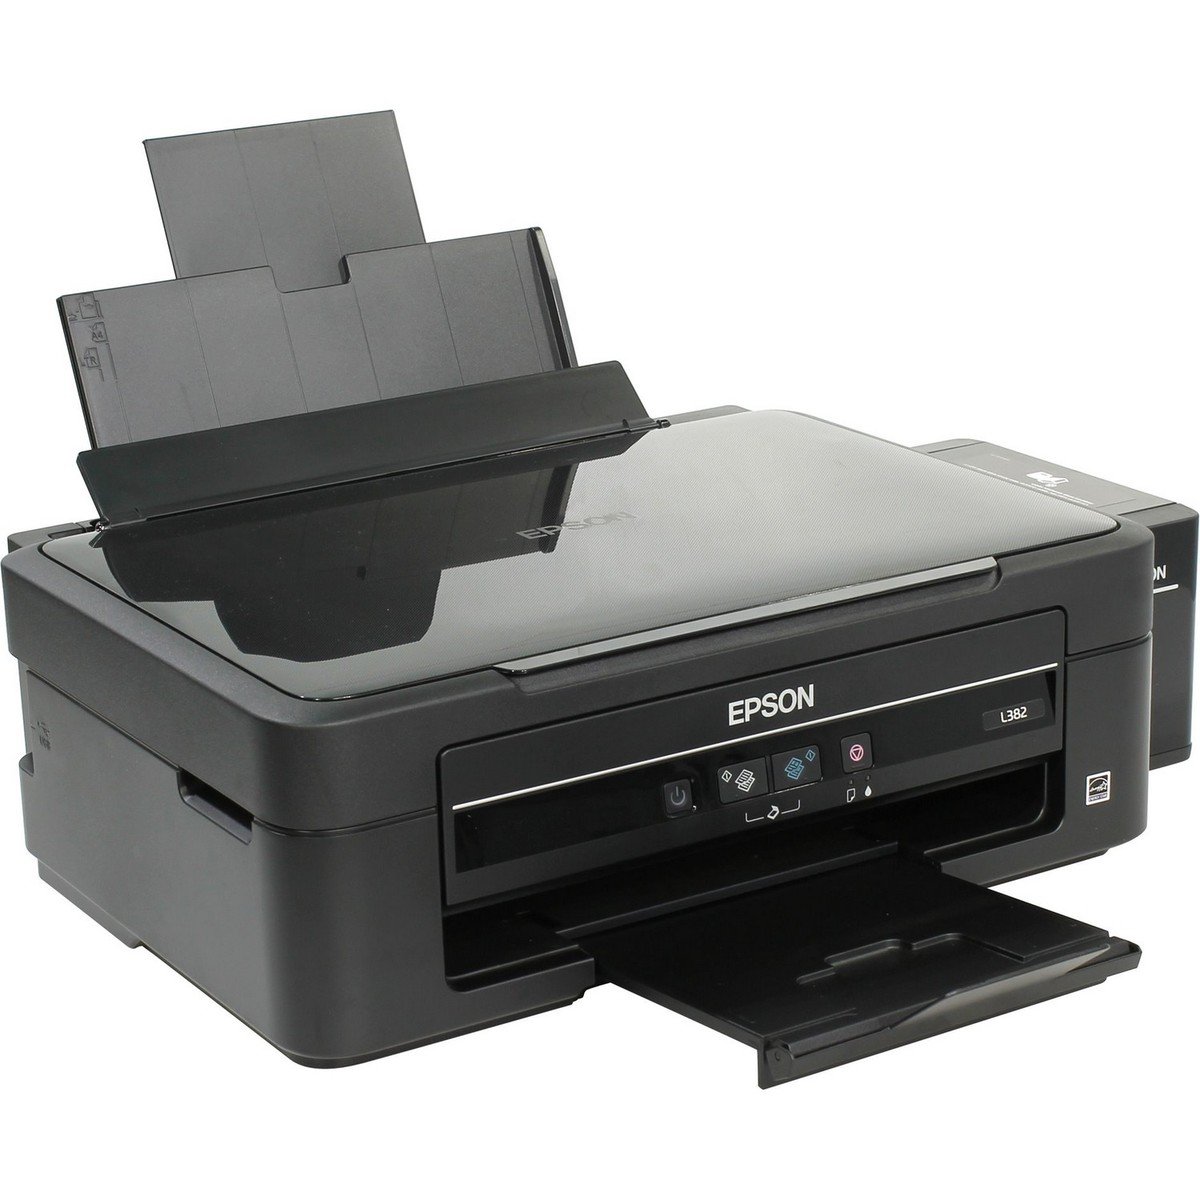 Epson 3in1 InkTank PrinterL382